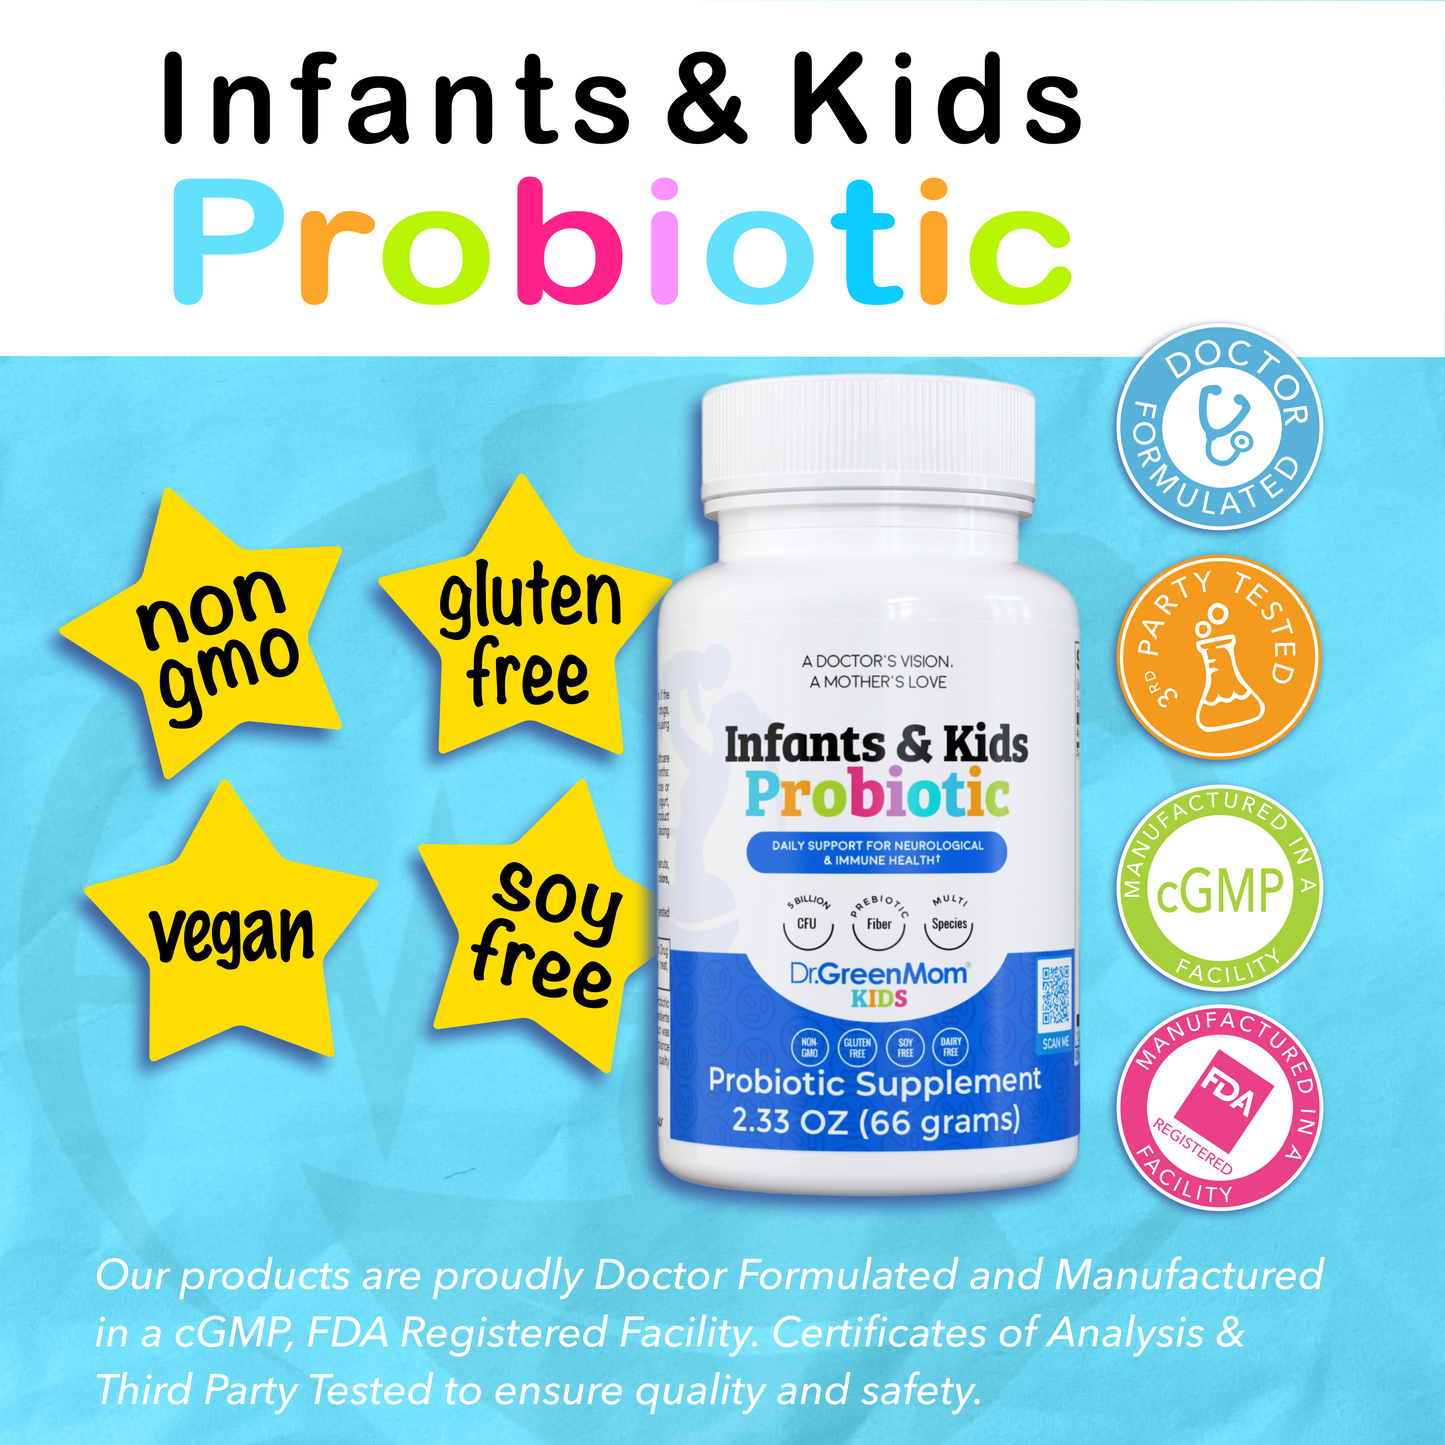 Infants & Kids Probiotic